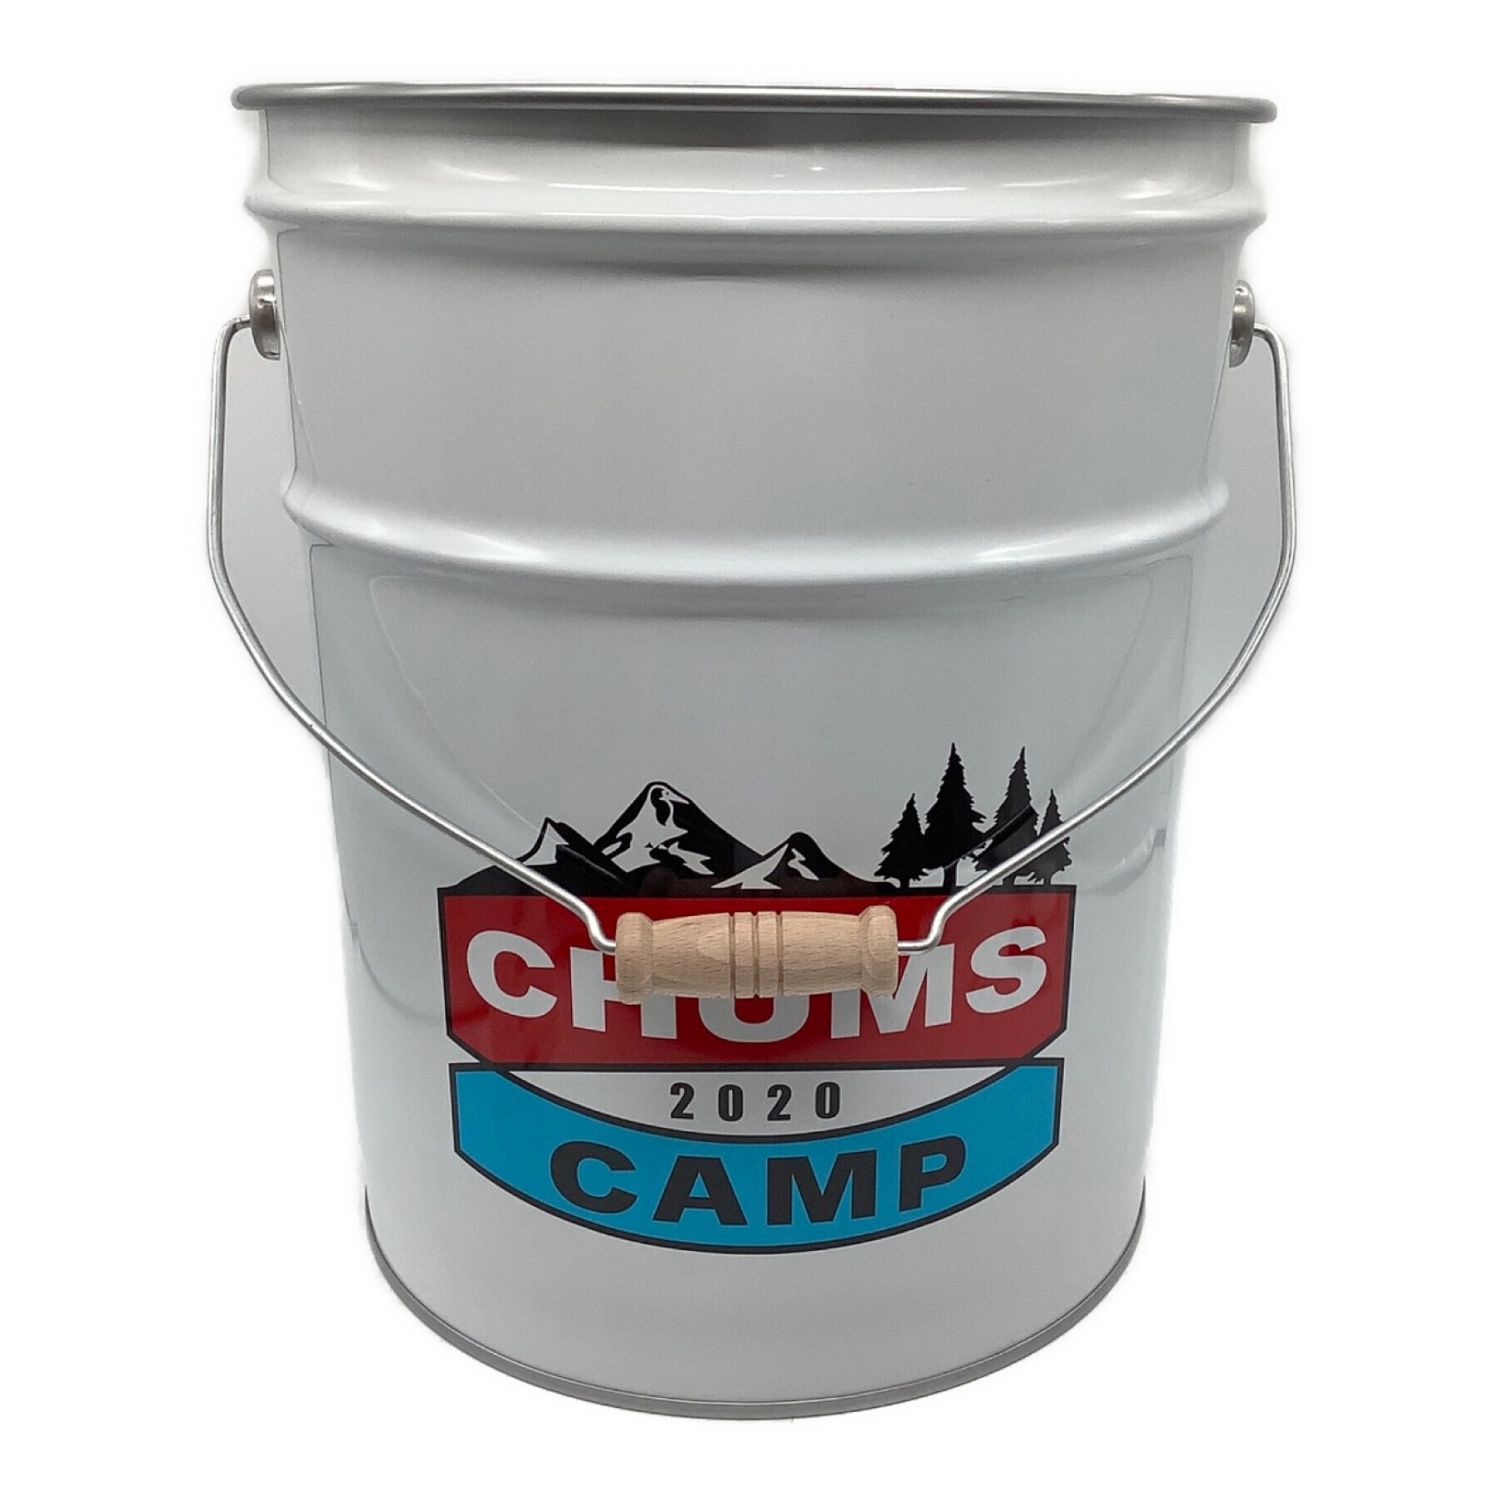 CHUMS CAMP 2020 ペール缶 - バスケット/かご